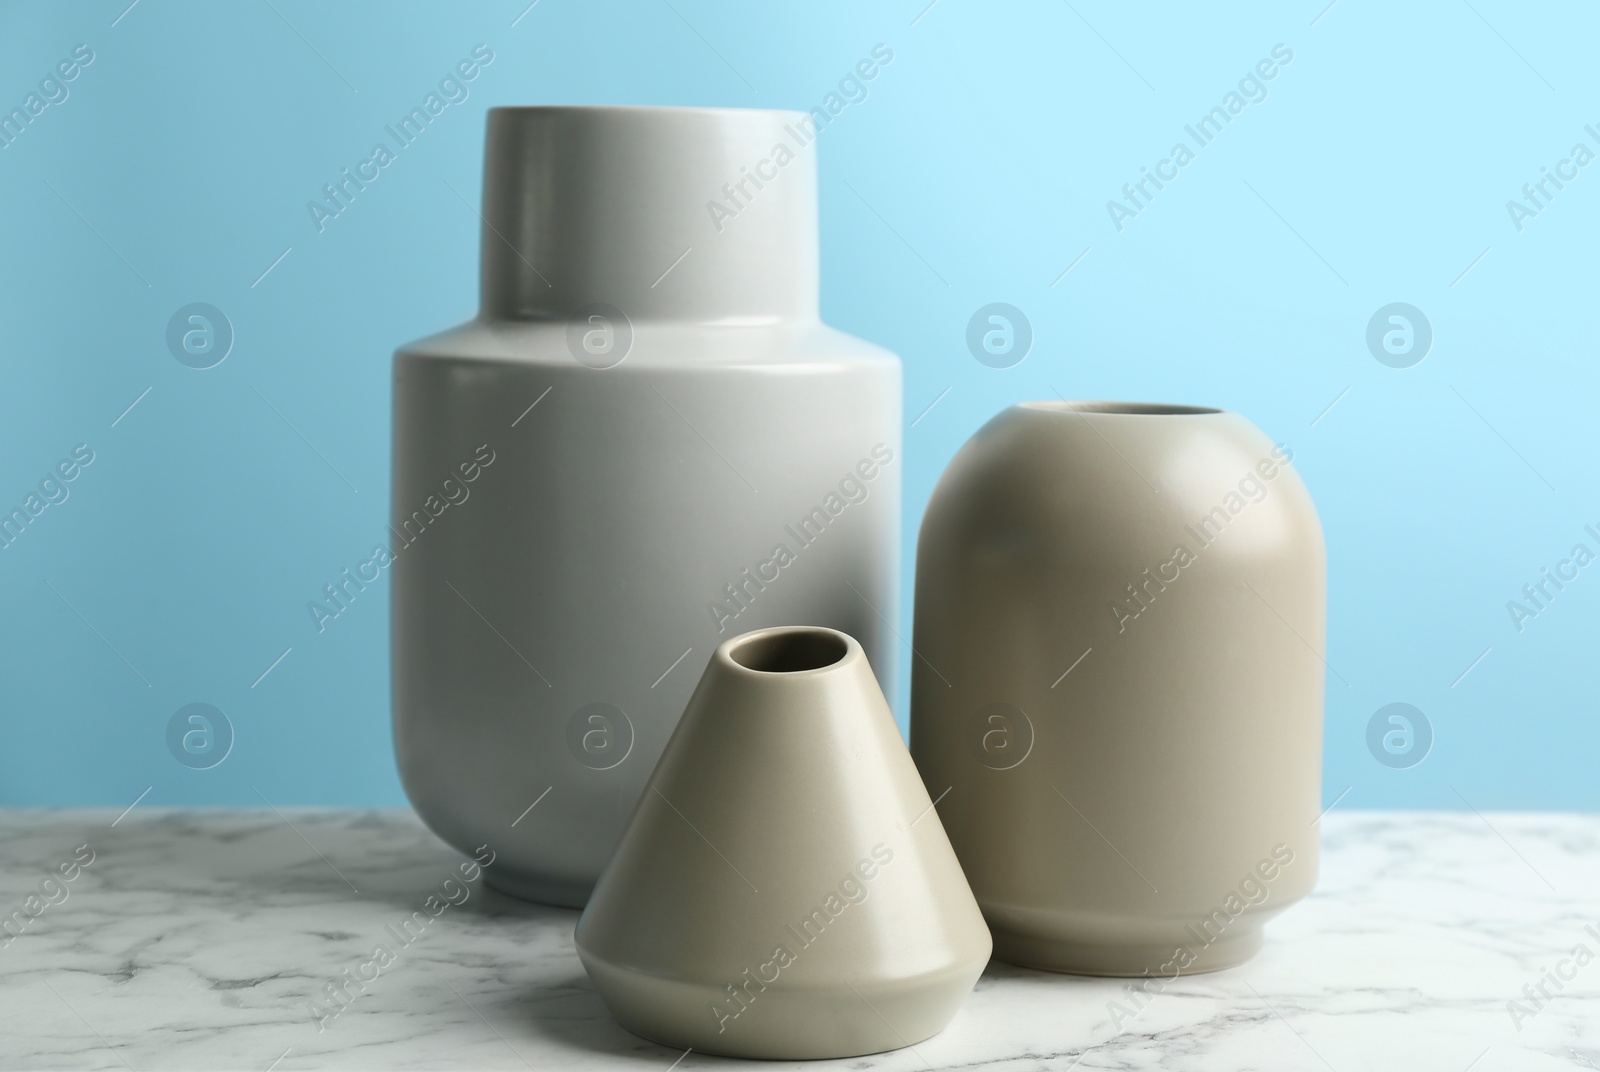 Photo of Stylish empty ceramic vases on white marble table against light blue background